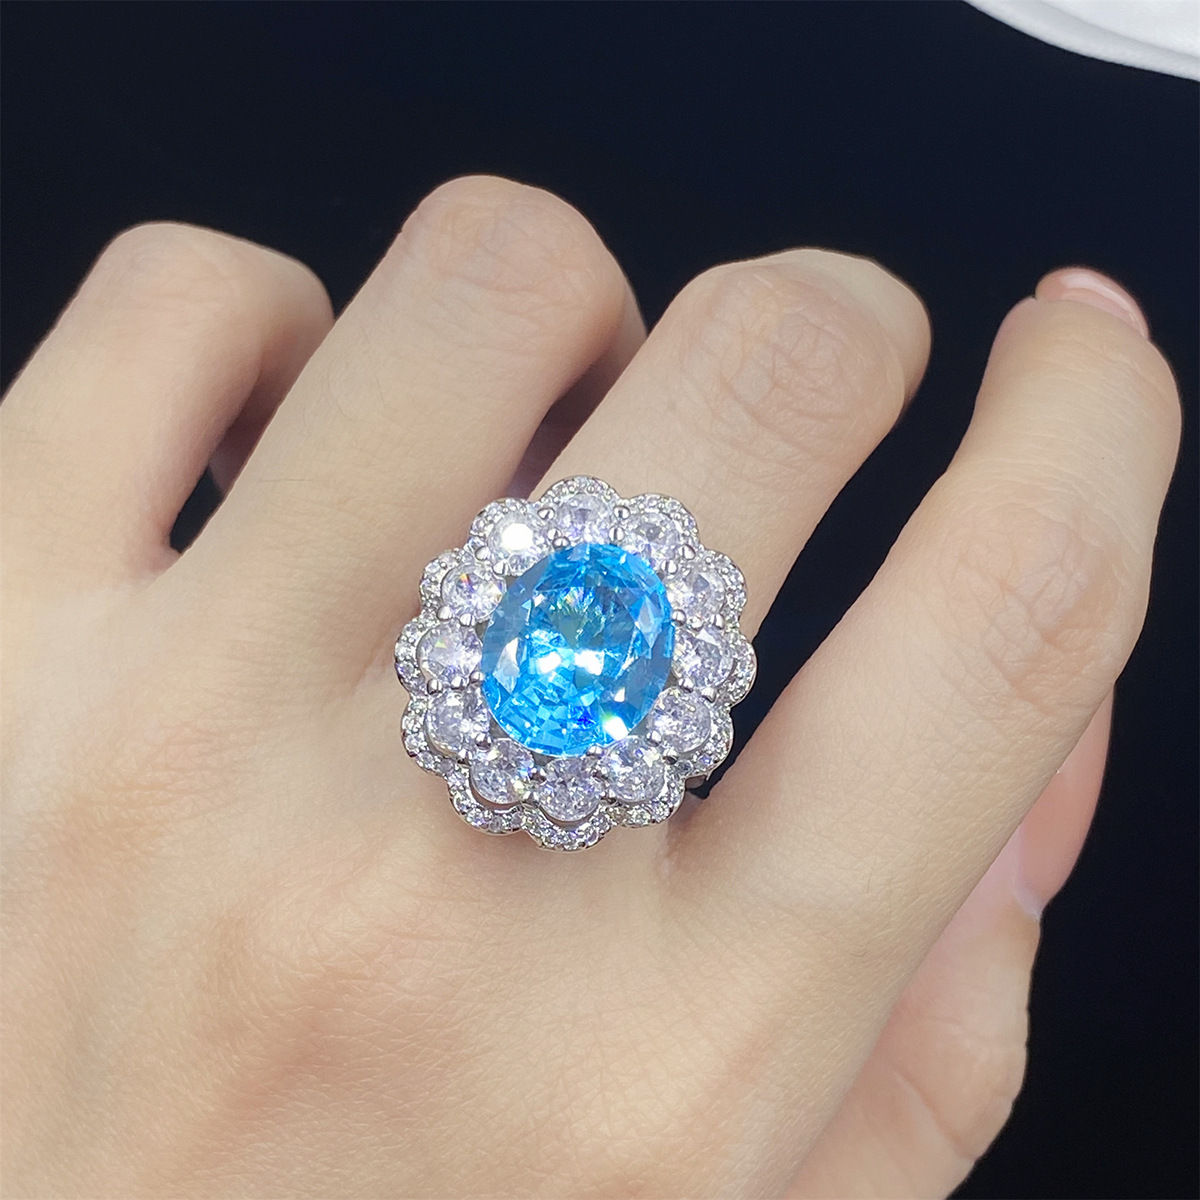 Conjunto de jóias de casamento feminino oco céu azul cristal zircon diamante anel aberto pingente colar brincos namorada festa aniversário presente